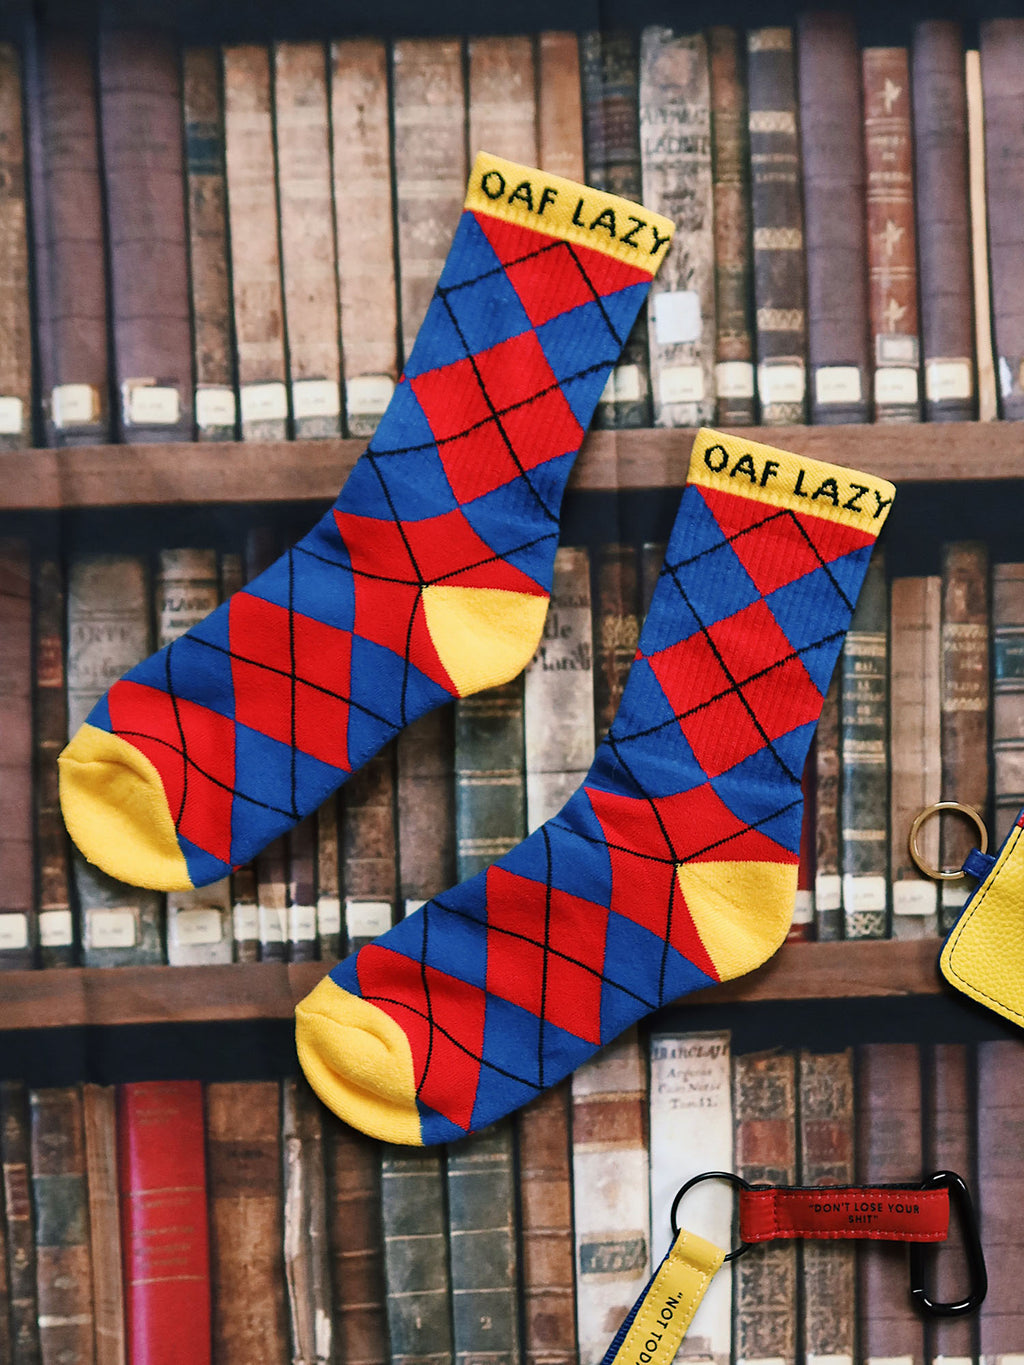 Lazy Oaf Primary Argyle Socks